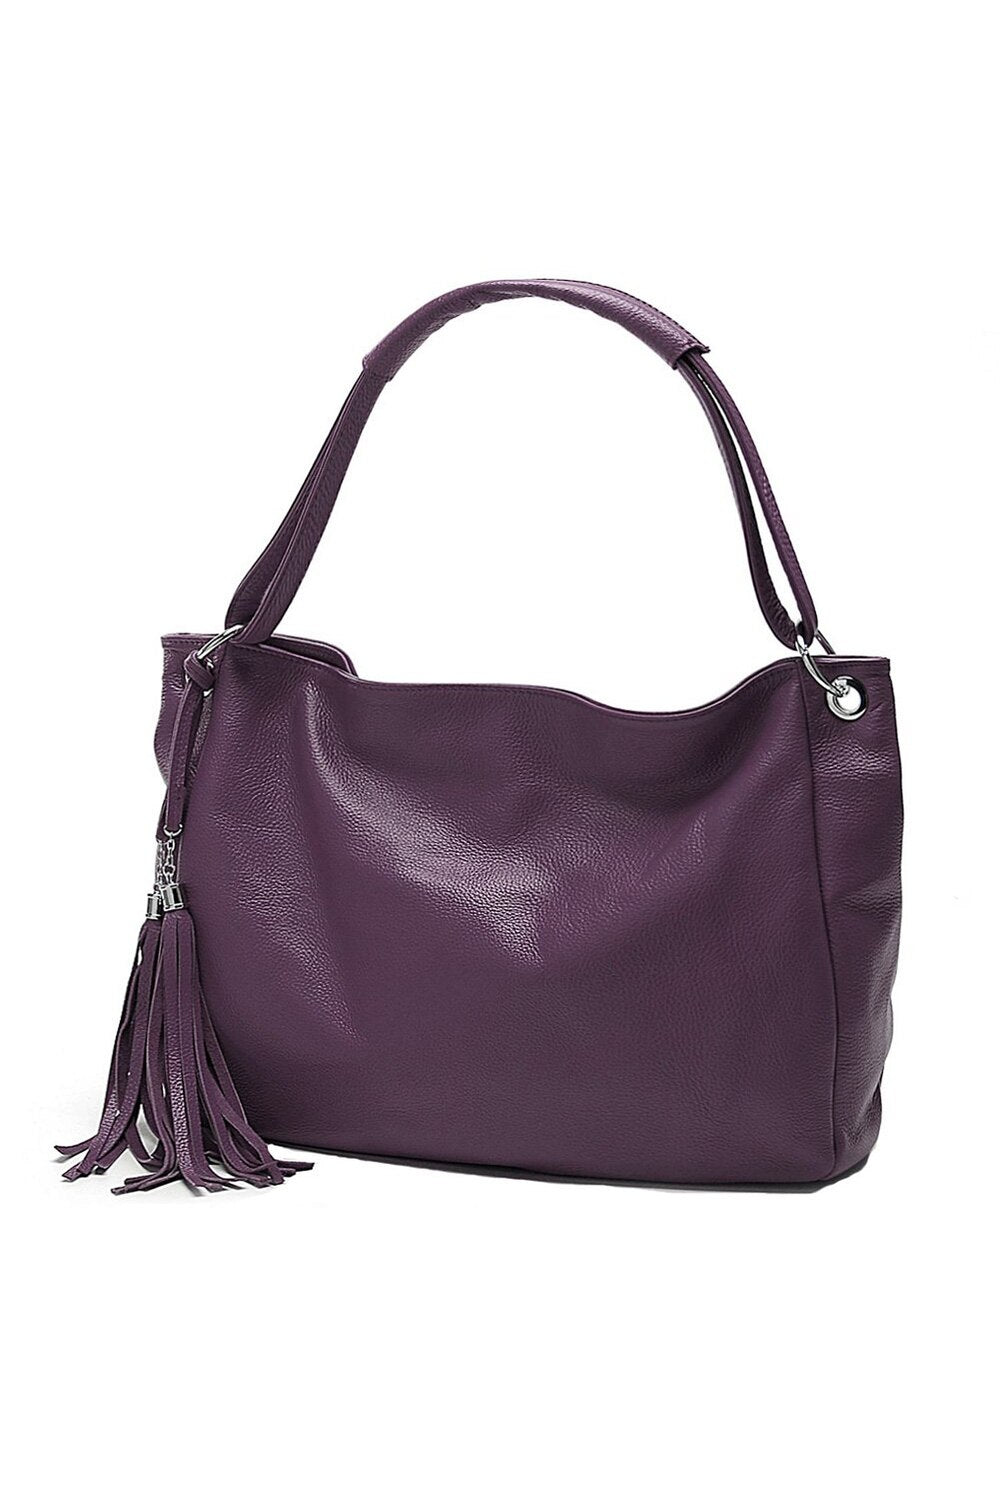 Women Handbag PU Leather Zipper Closure Tassel Crossbody Shoulder Bag Purple - ebowsos